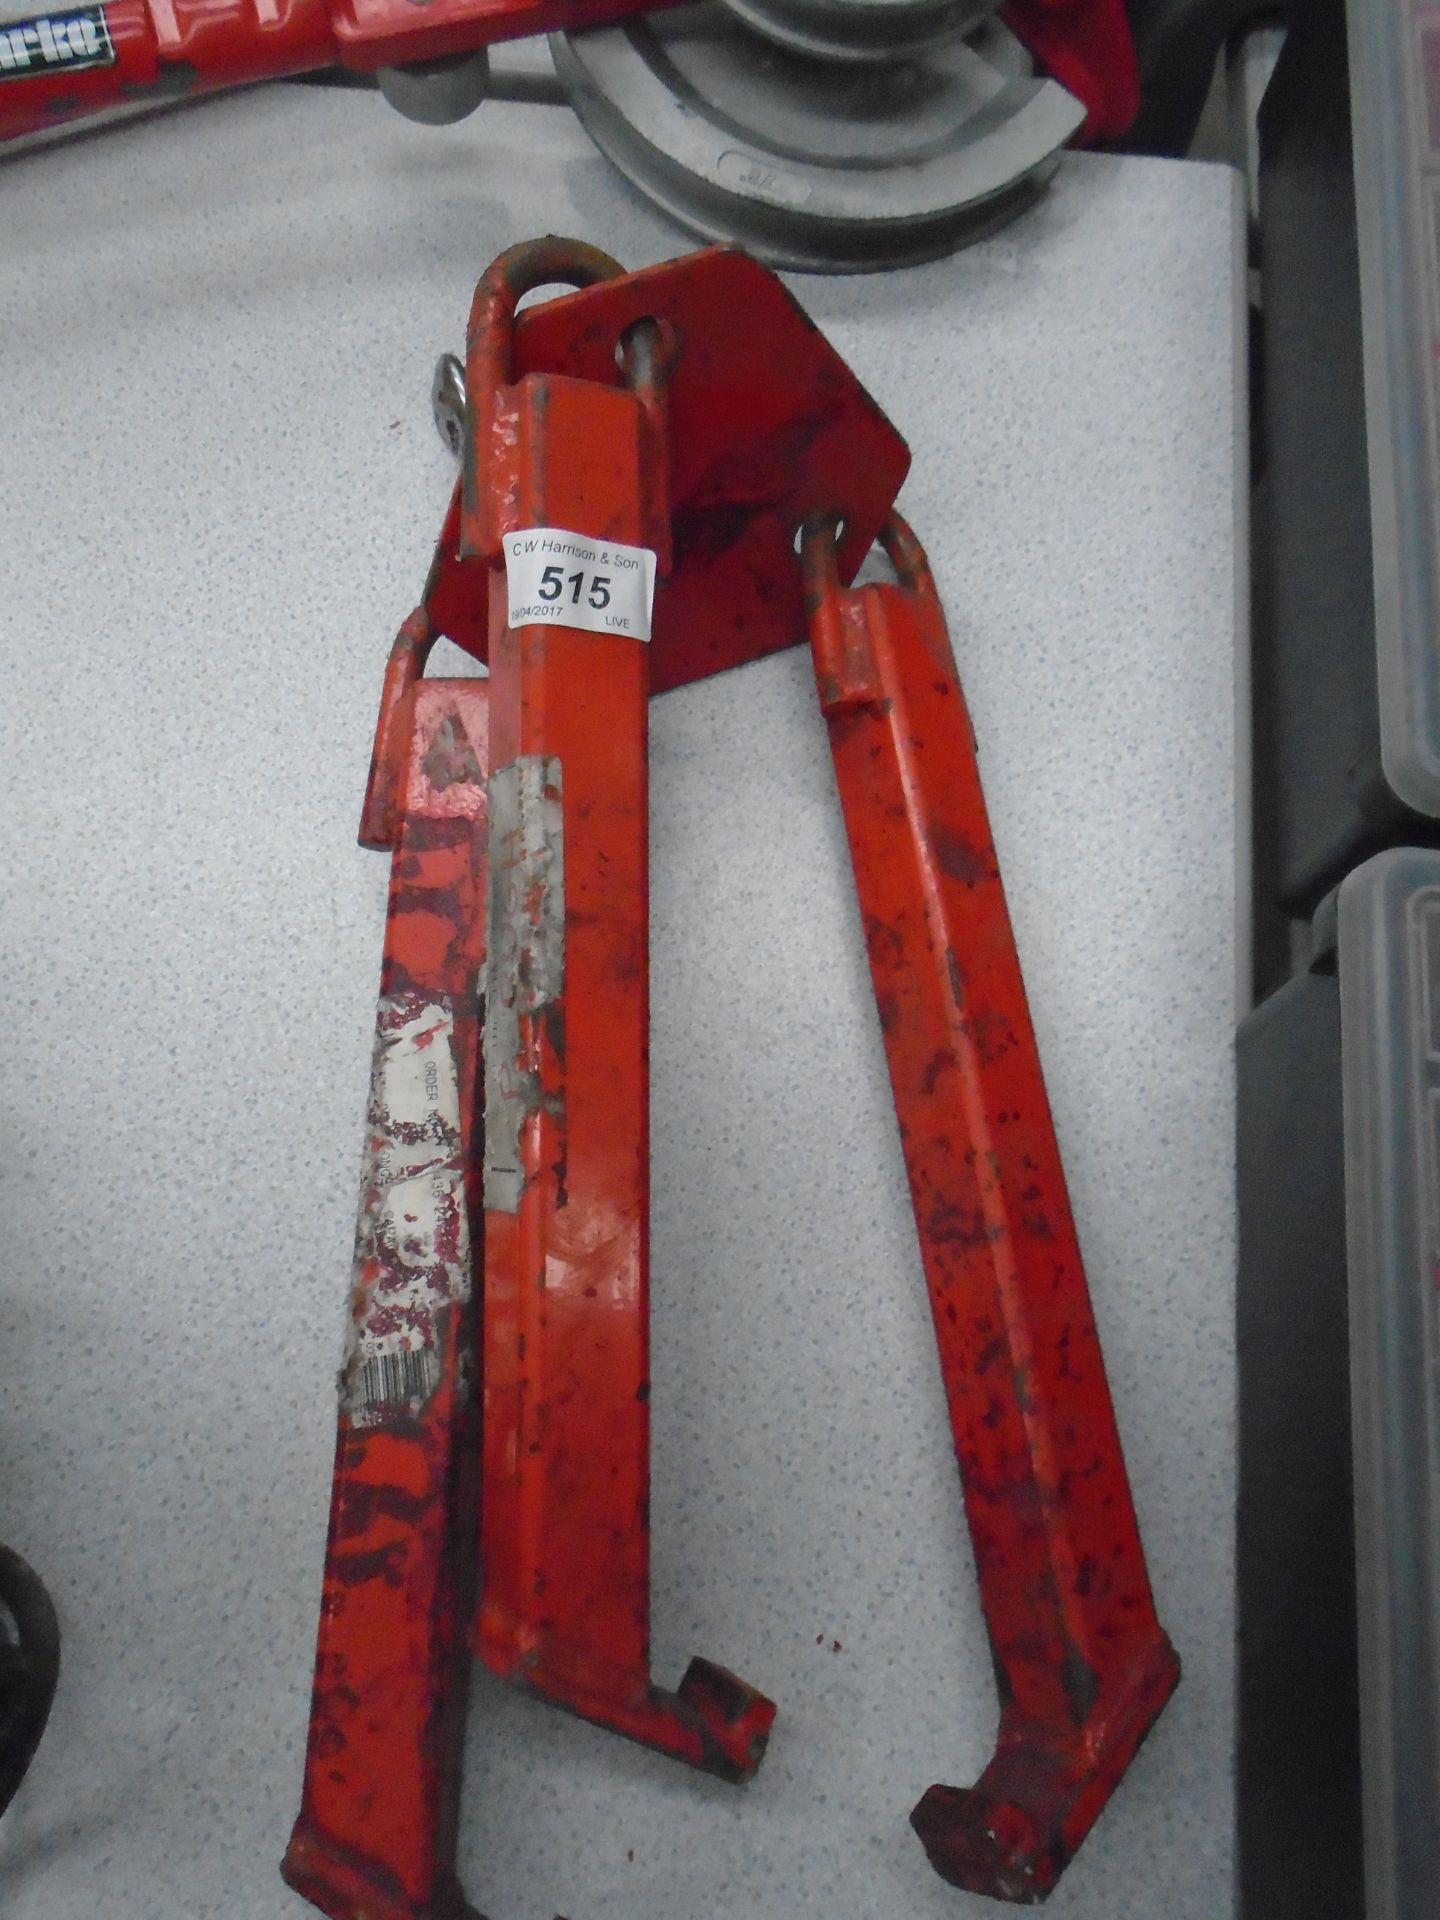 A red metal 3 leg lifting barrel clamp